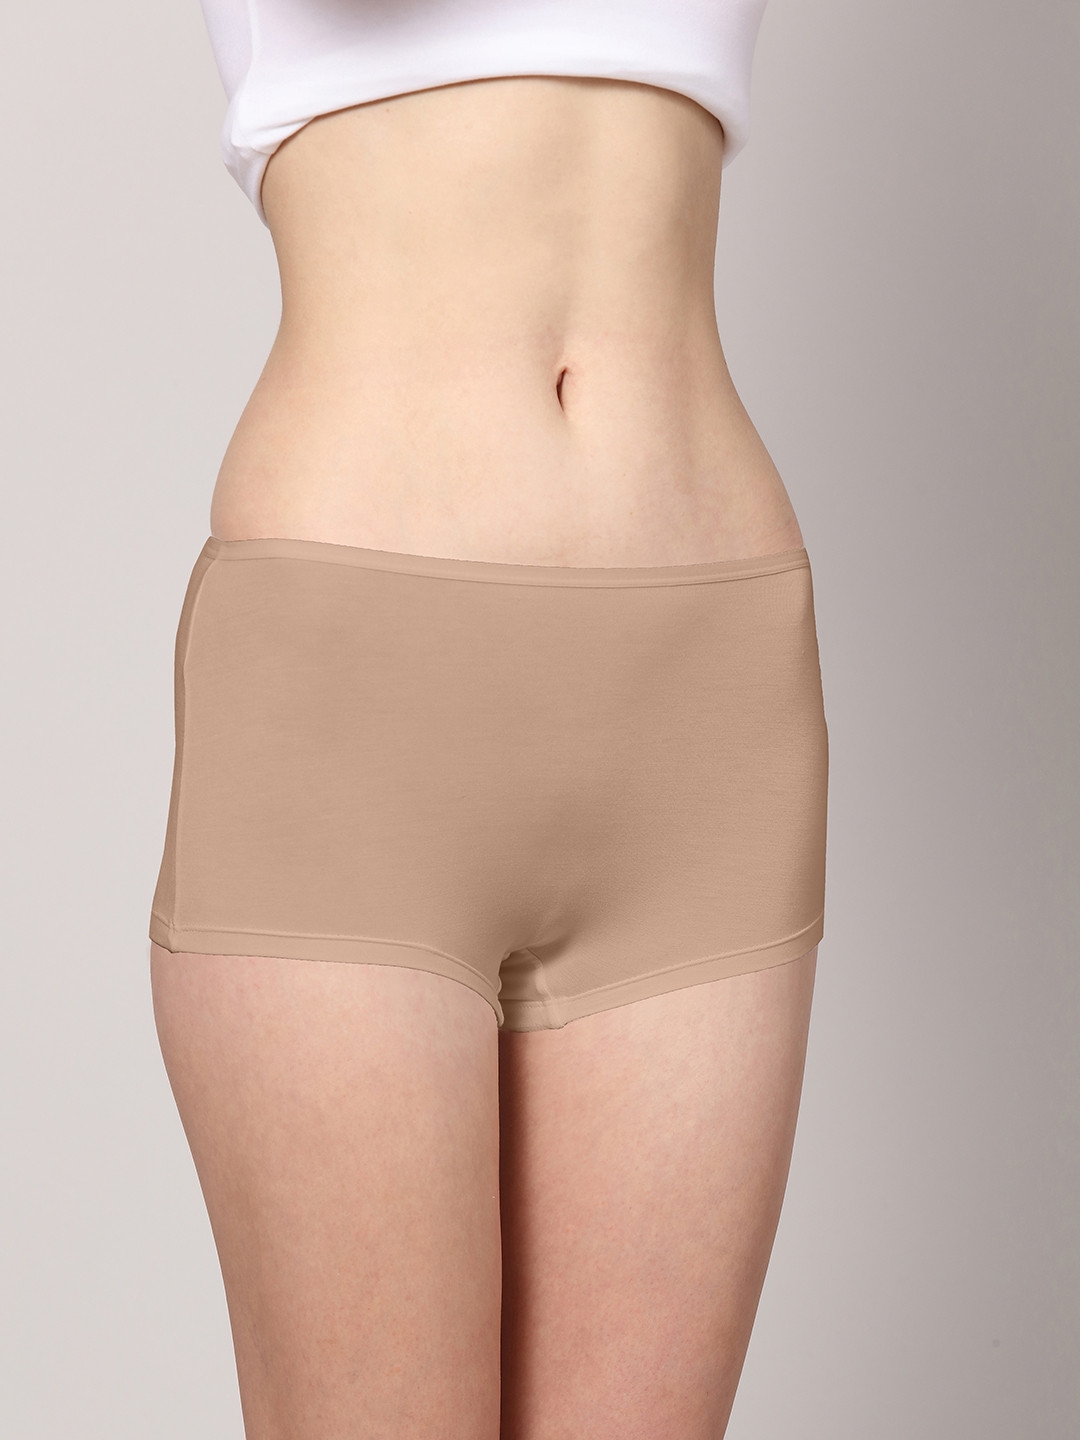 AshleyandAlvis | AshleyandAlvis Women's Panties Micro Modal, Anti Bacterial, Skinny Soft, Premium Boyshorts -No Itching, Sweat Proof, Double In-seam Gusset 2